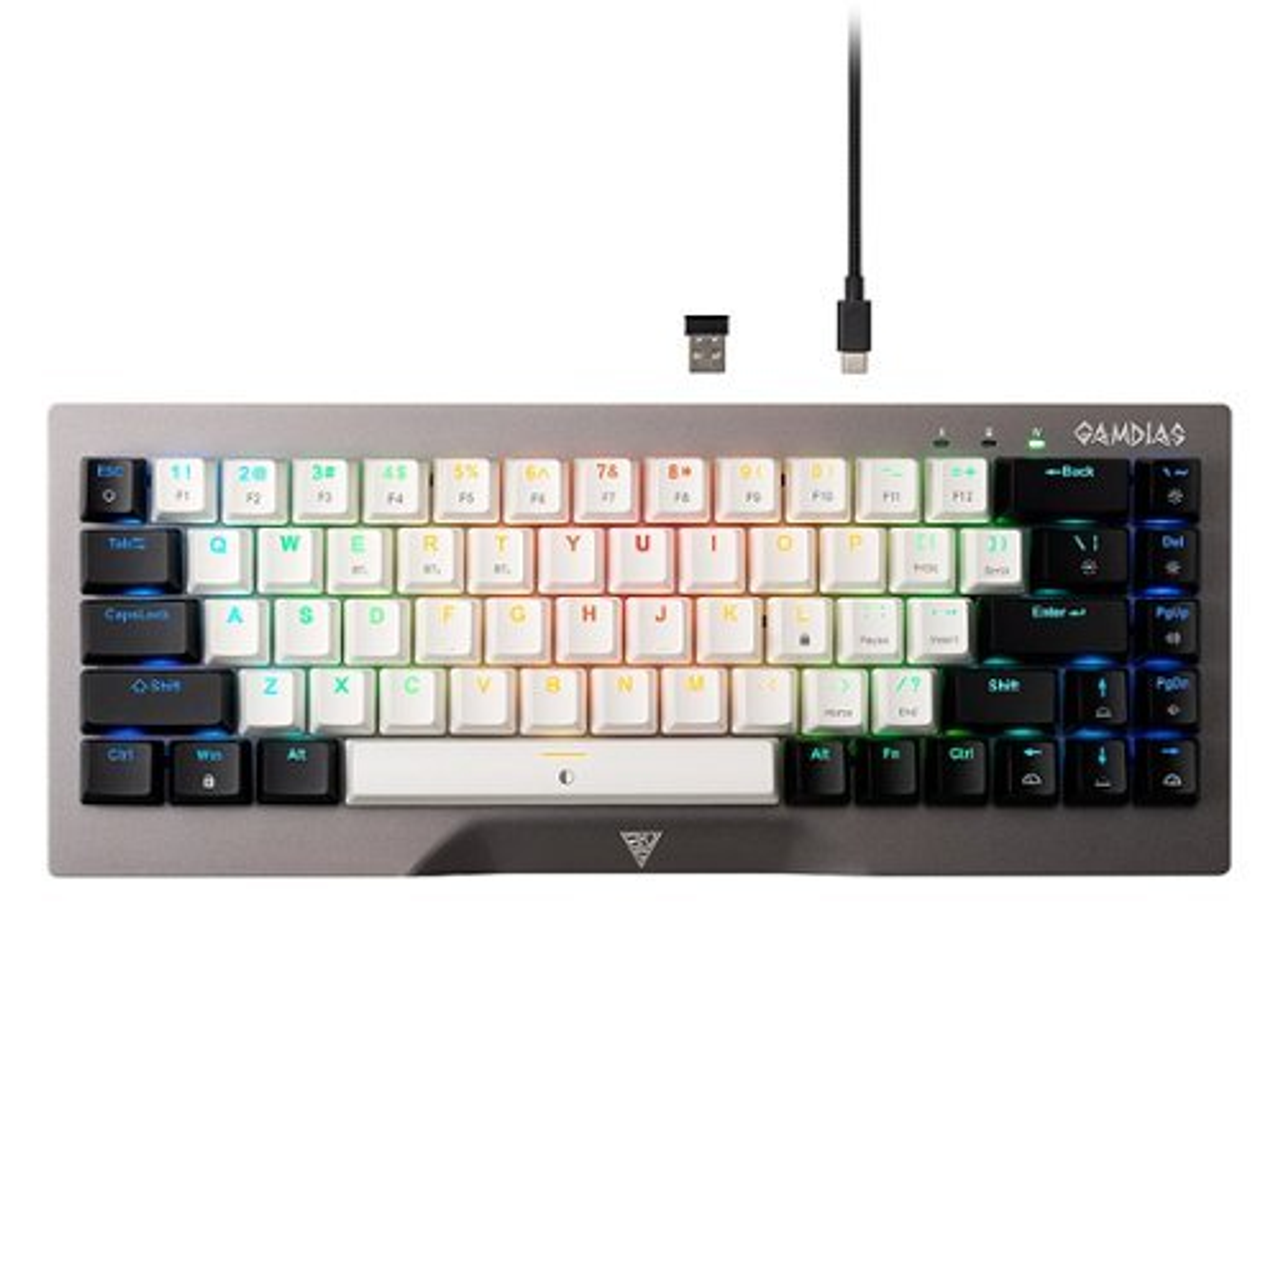 GAMDIAS - Hermes M4 Hybrid 65% Wired Mechanical Gaming Keyboard with RGB Backlighting - Gunmetal Grey